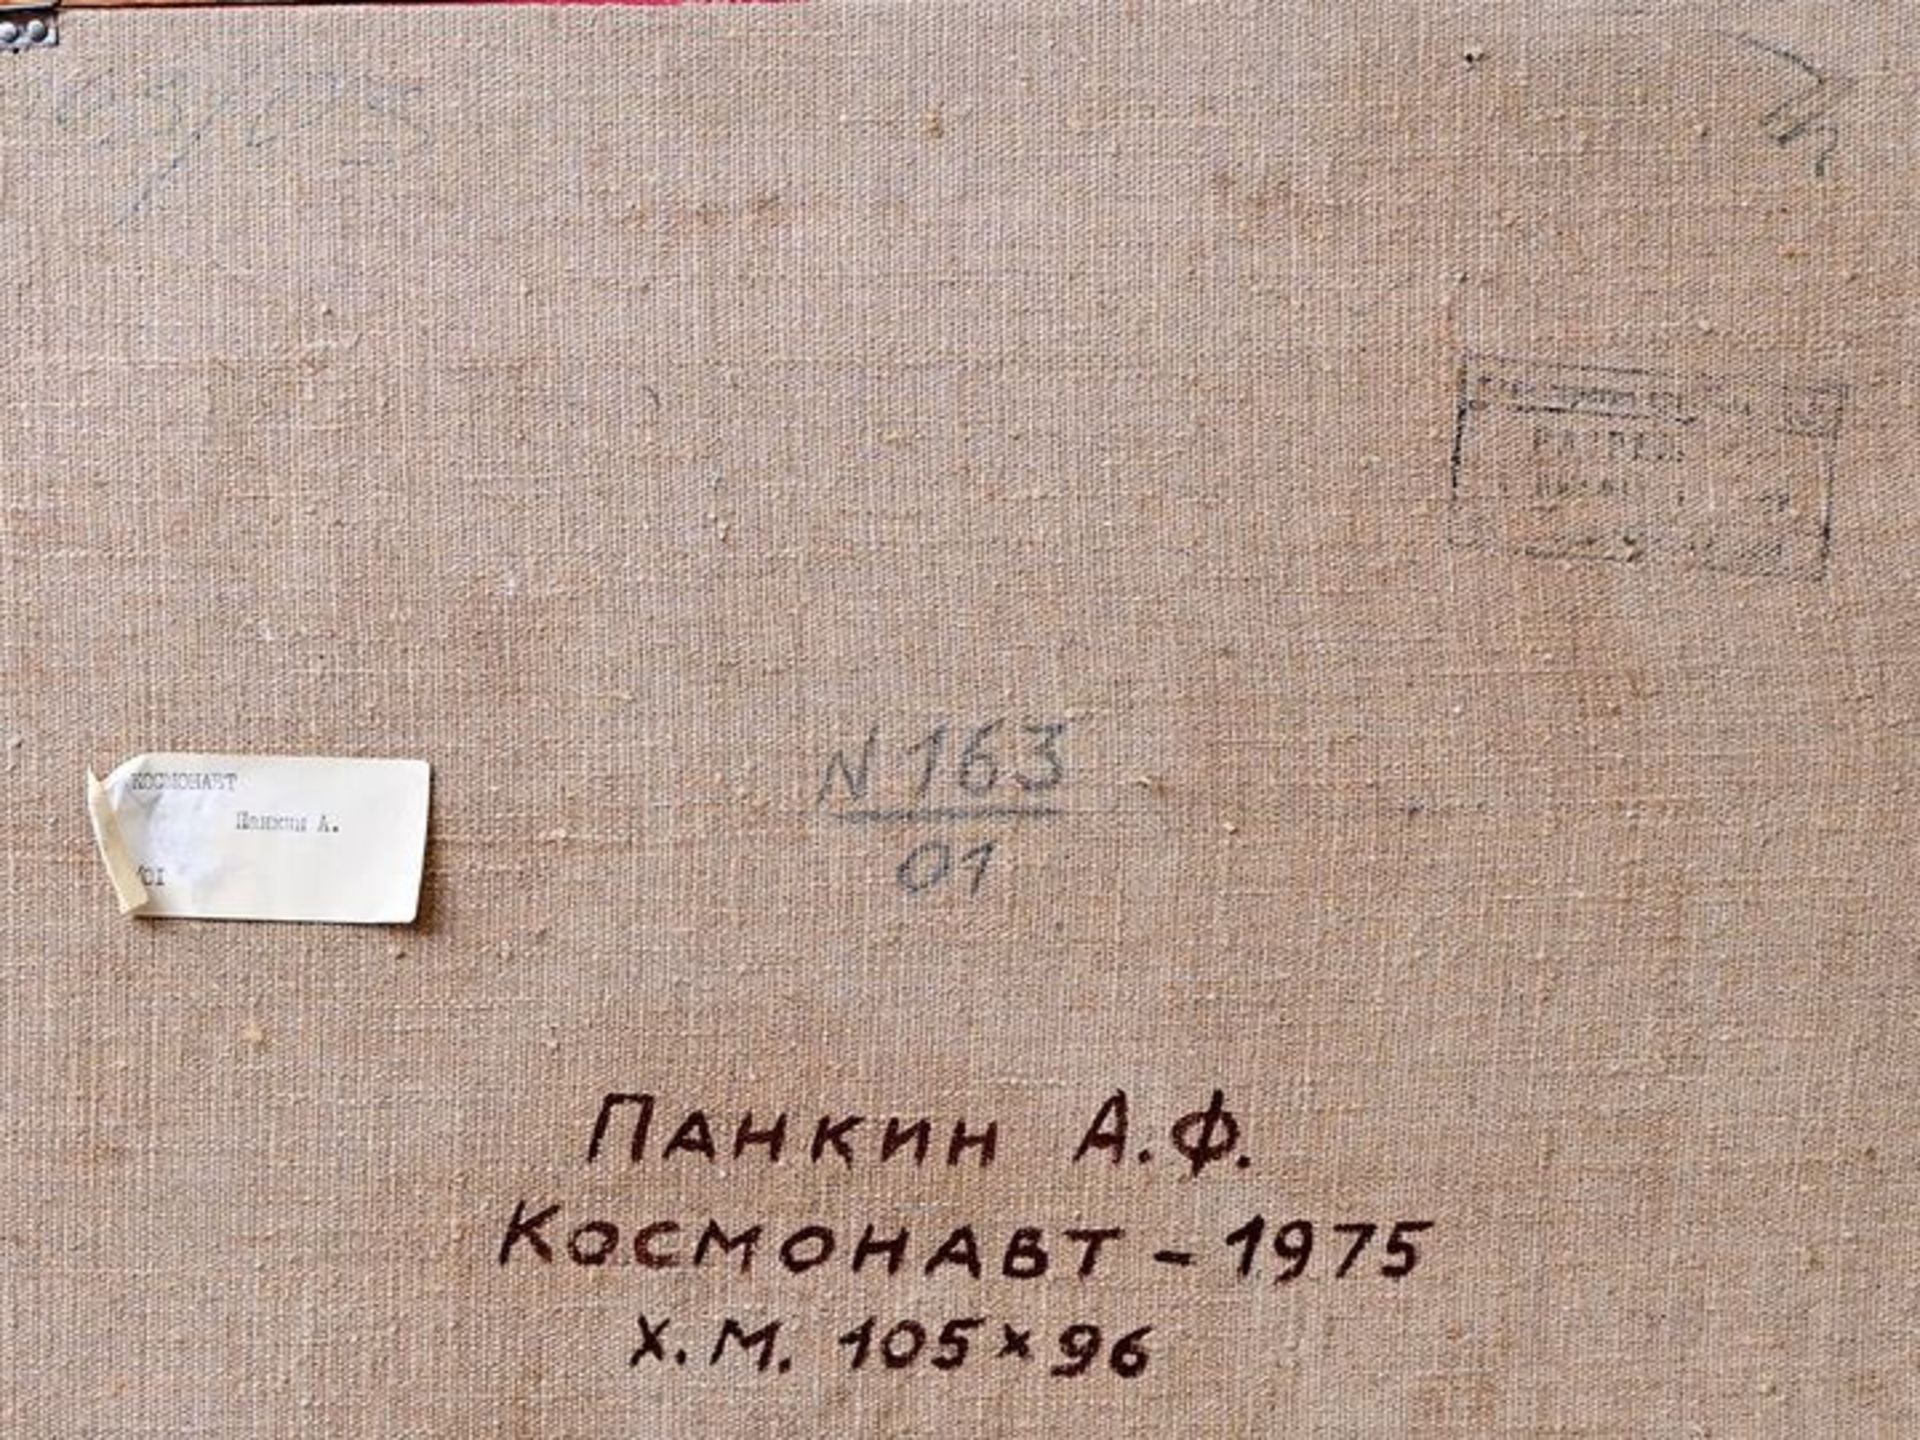 Pankin, A.: Kosmonaut / Cosmonaut - Image 5 of 5